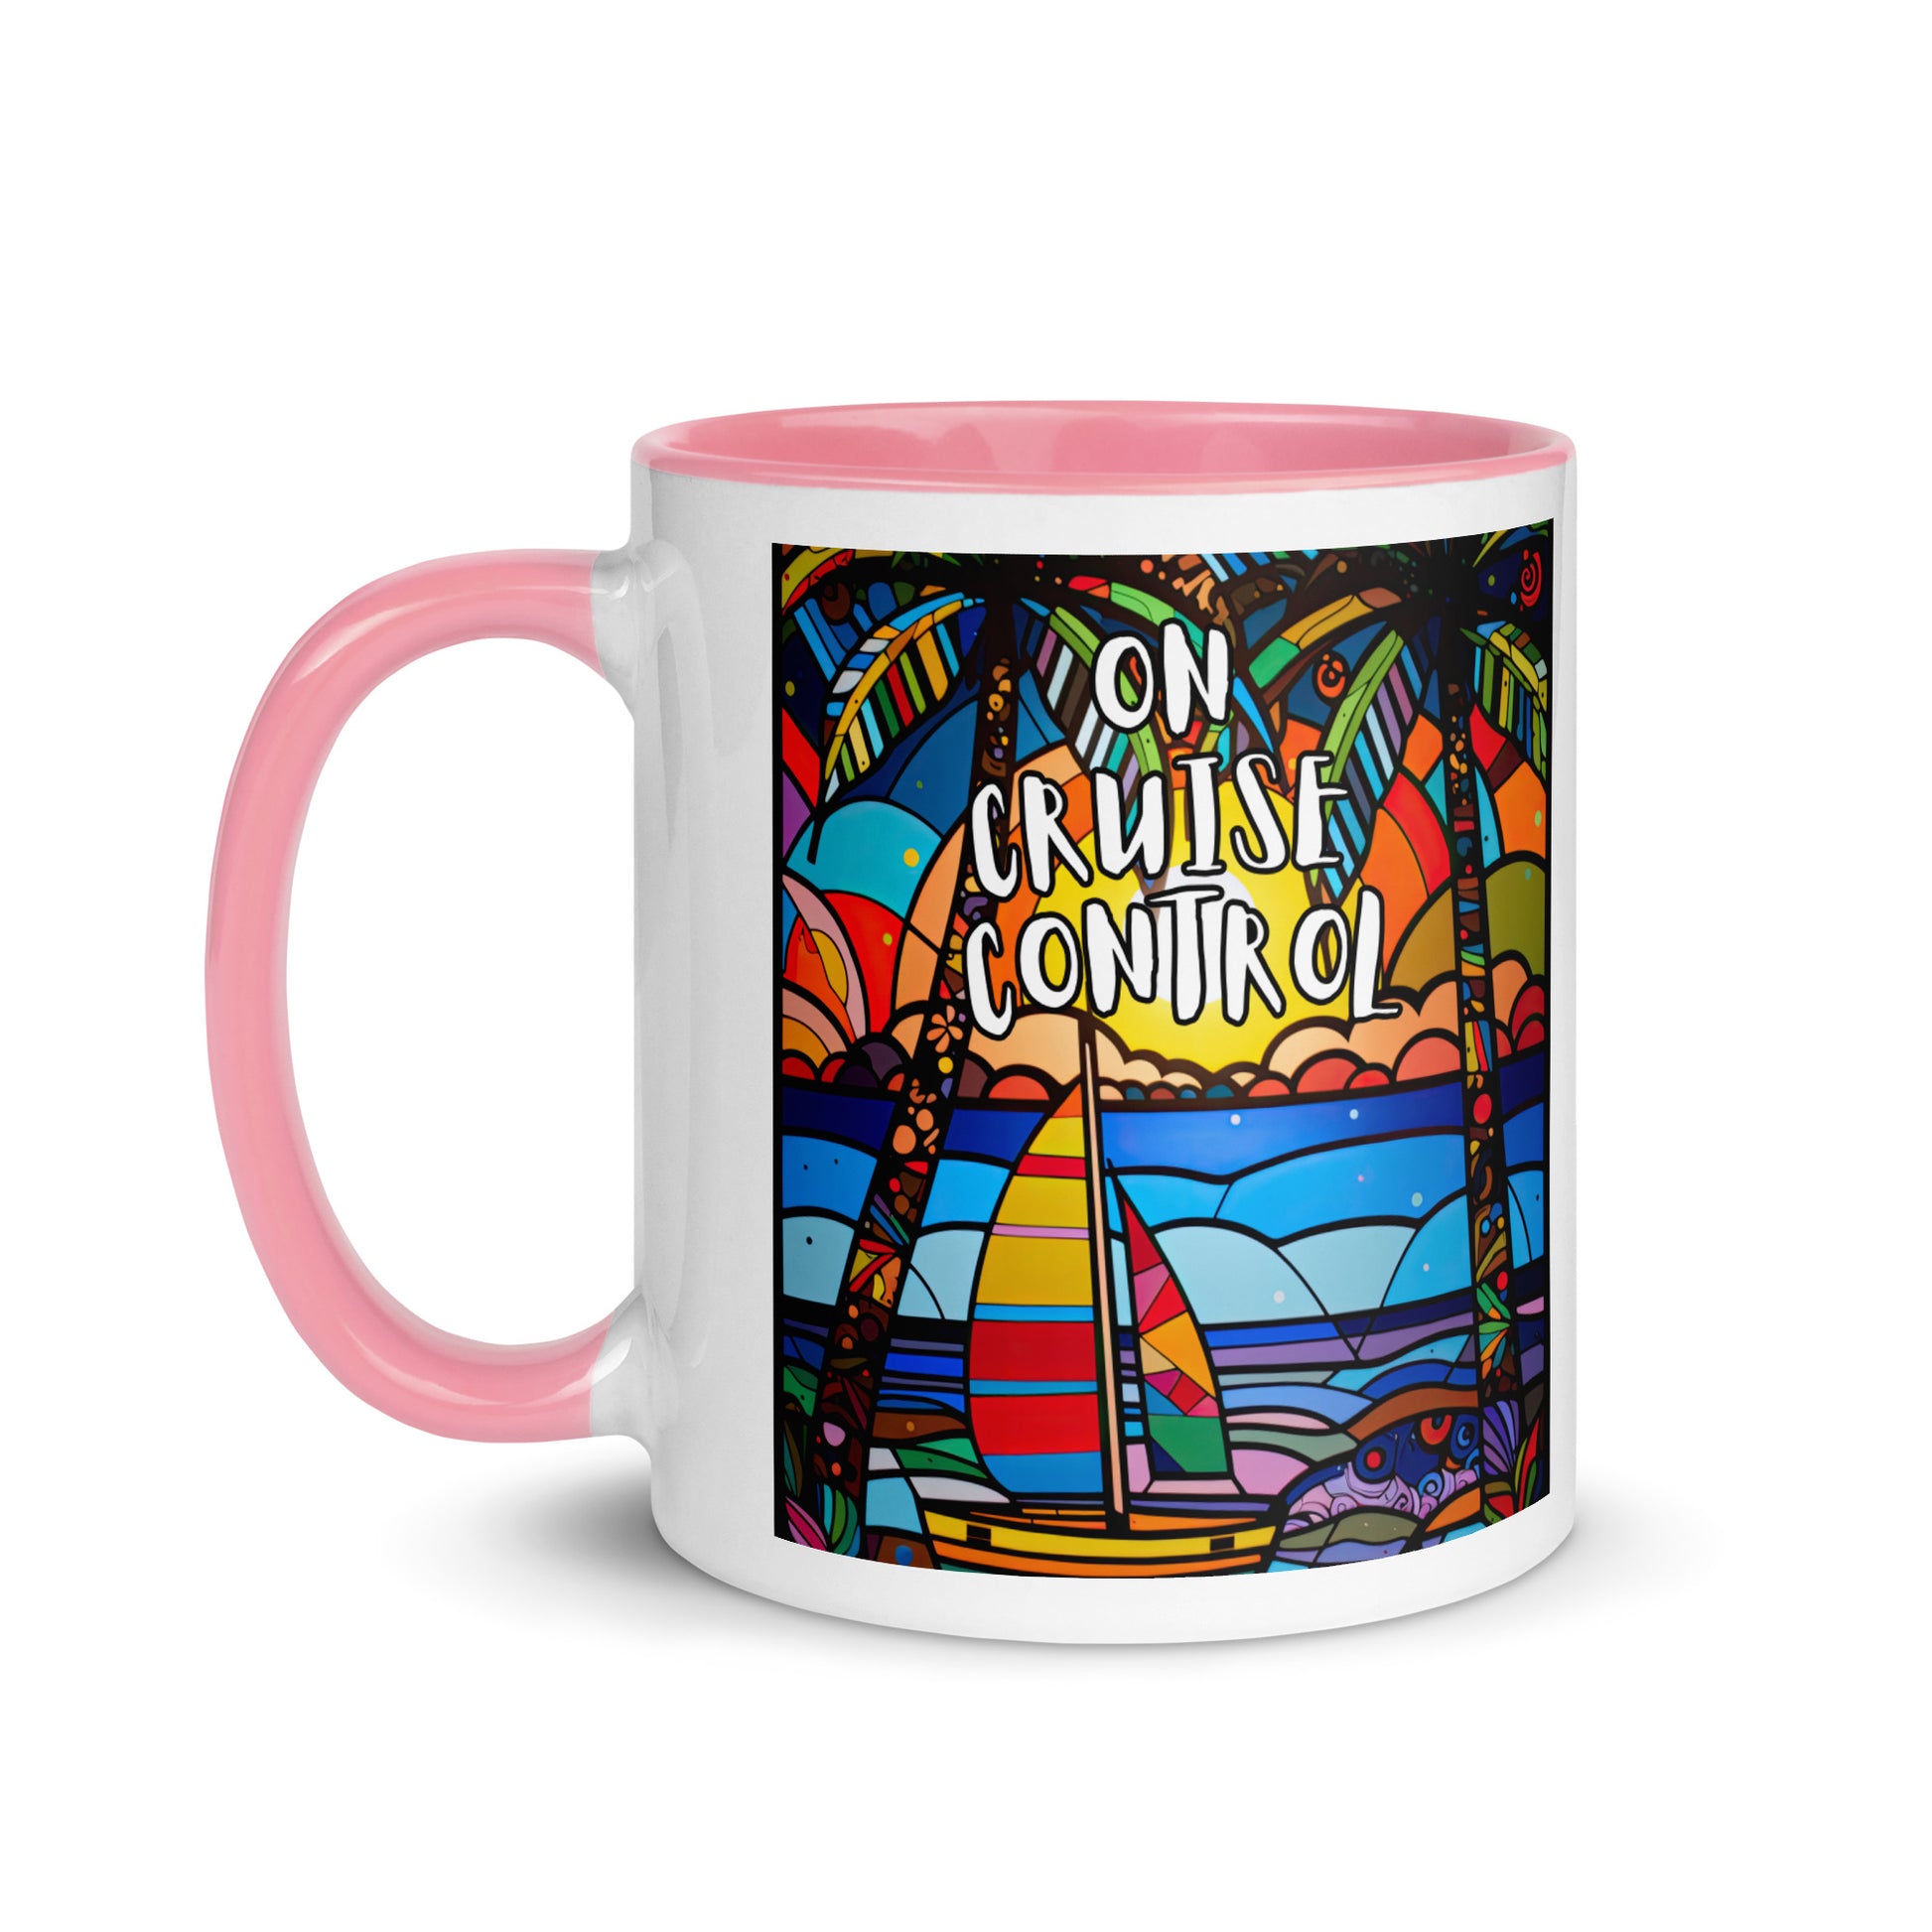 On/No Cruise Control Mug with Color Inside - Sunshine on the Seas